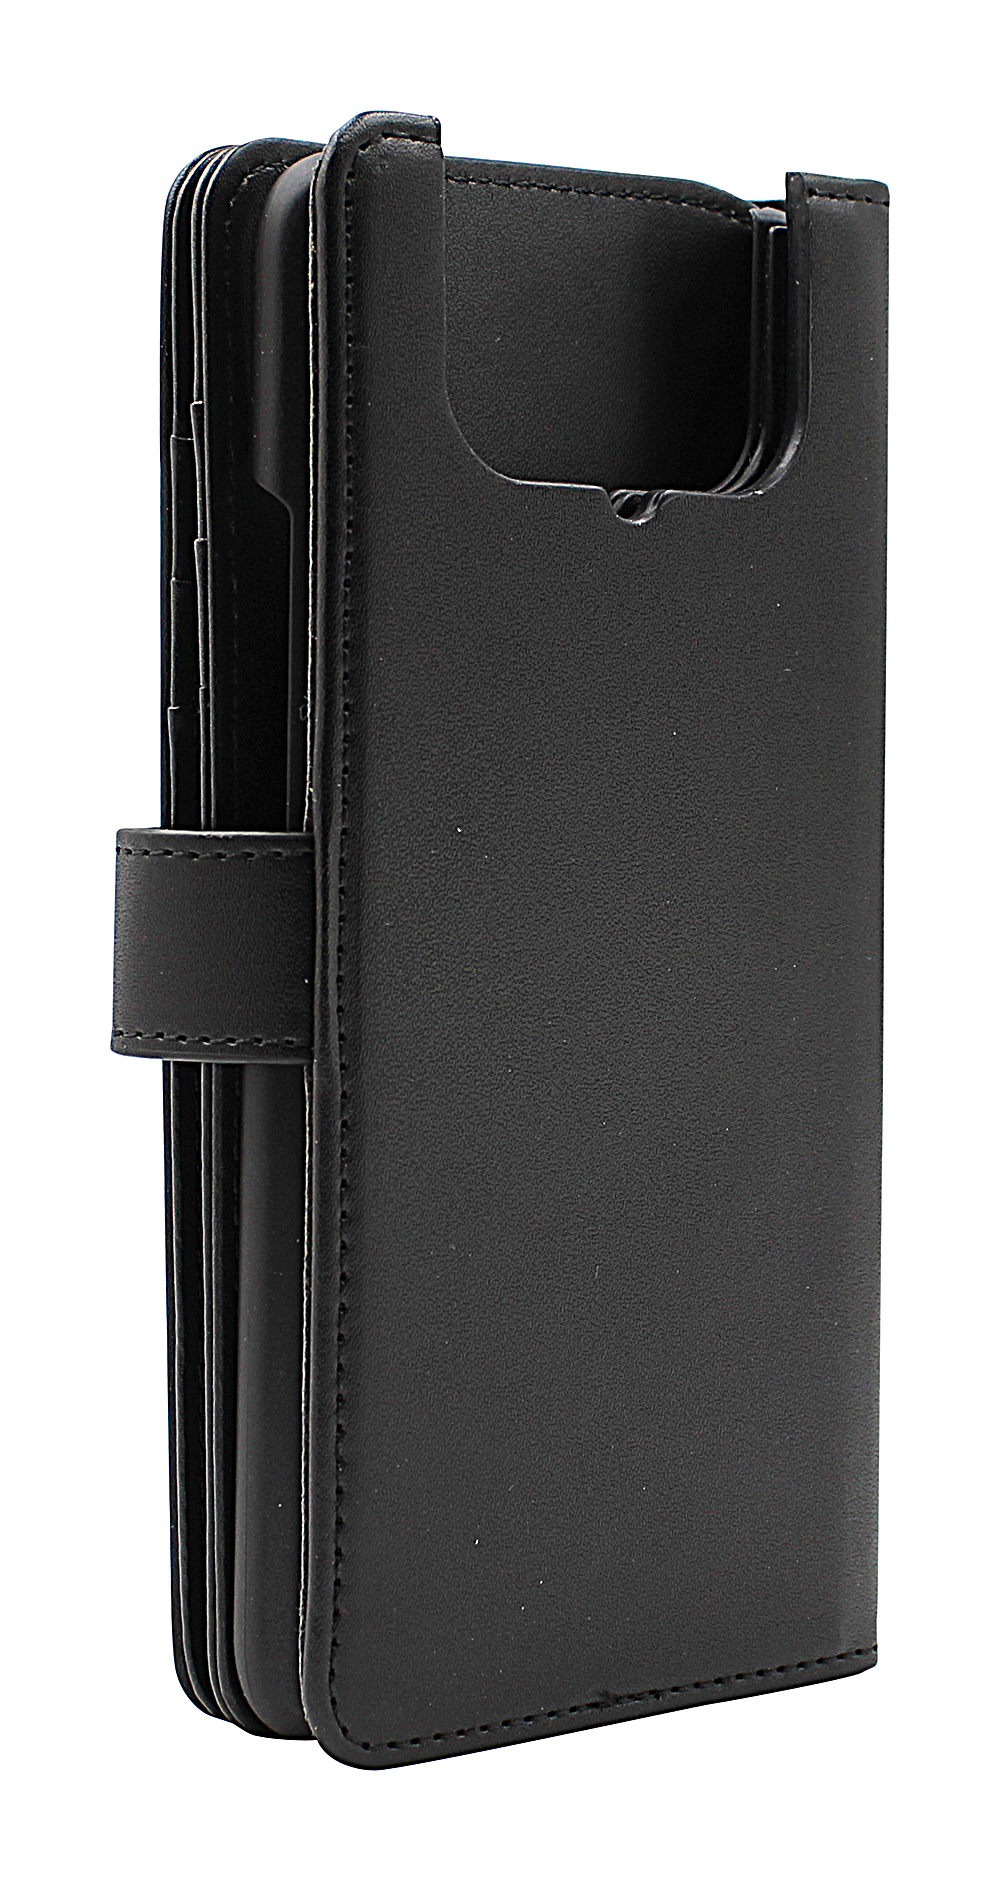 CoverIn Skimblocker XL Magnet Wallet Asus ZenFone 7 Pro (ZS671KS)